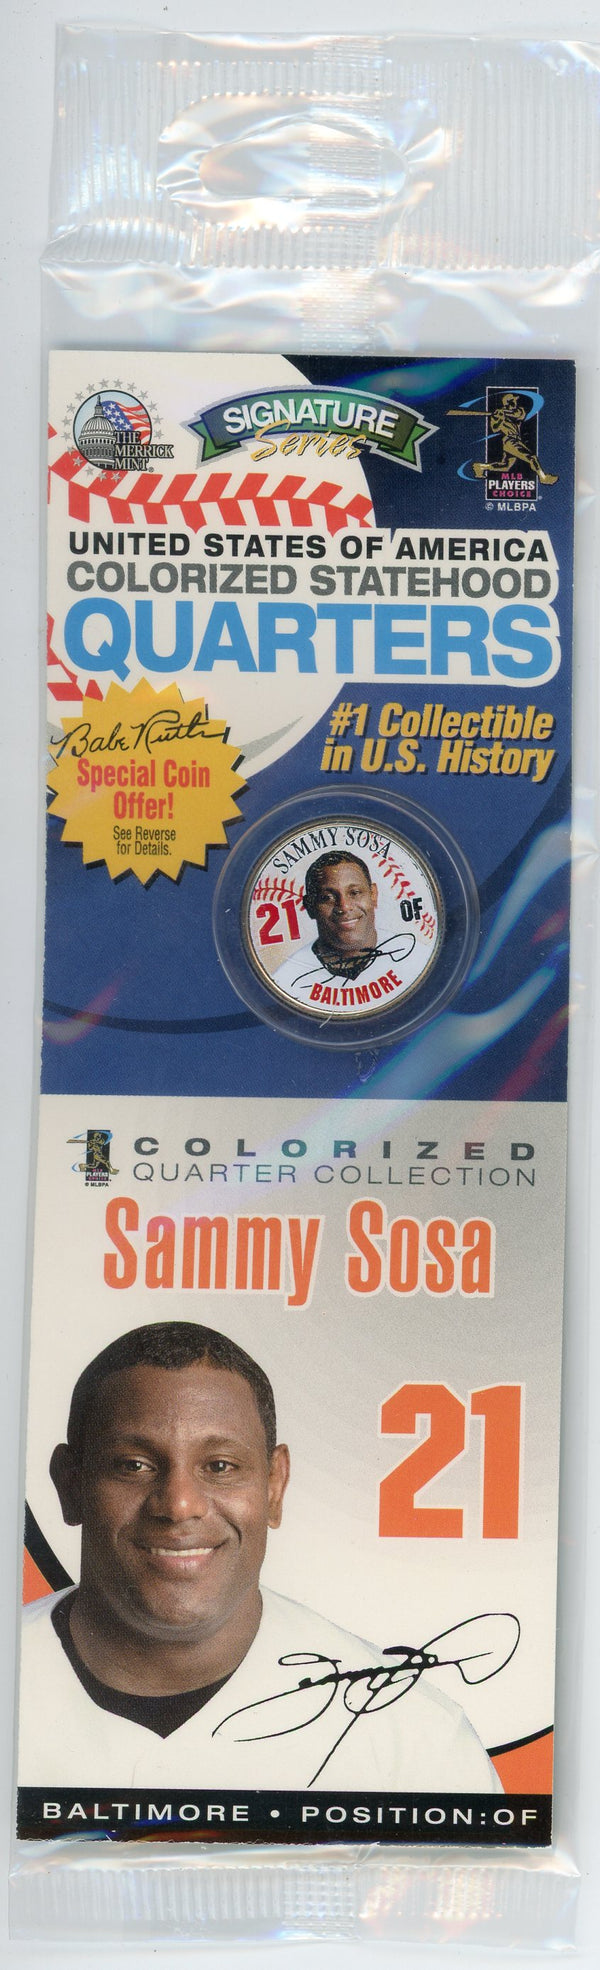 Sammy Sosa Colorized Statehood Quarter